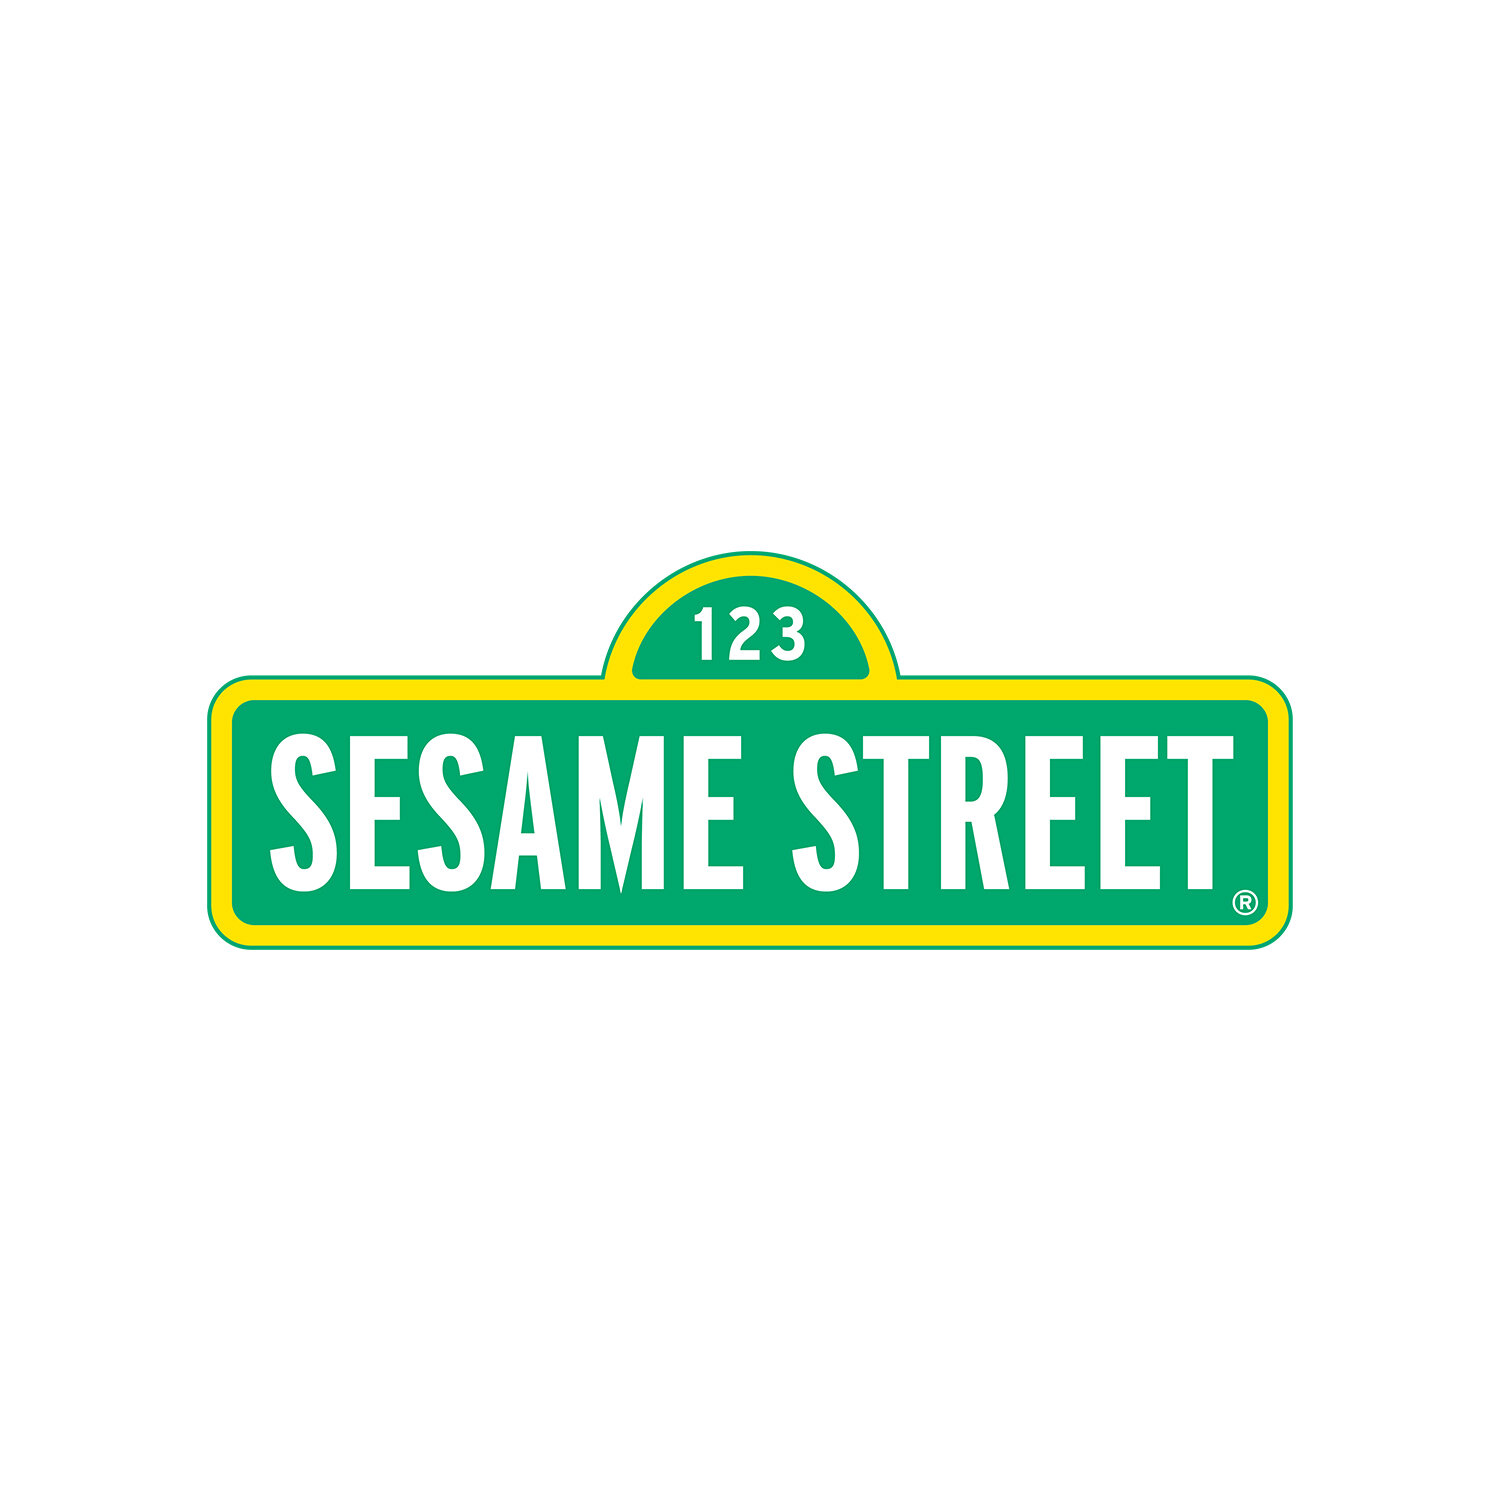 Small_0006_Sesame_Street2.jpg